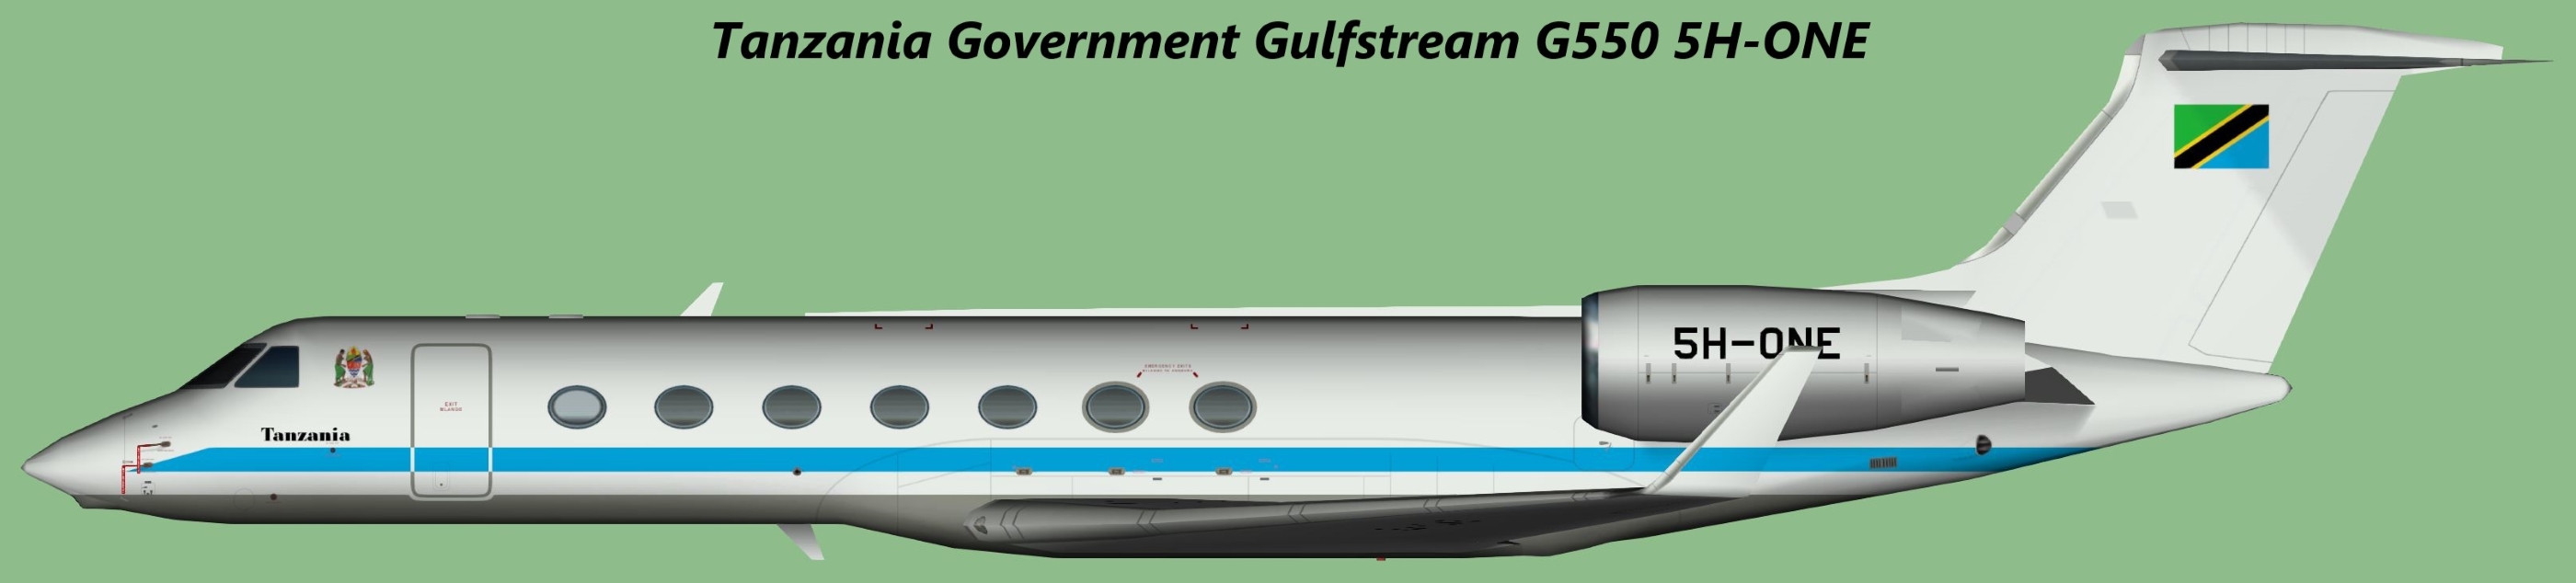 Tanzania Government Gulfstream G550 5H-ONE